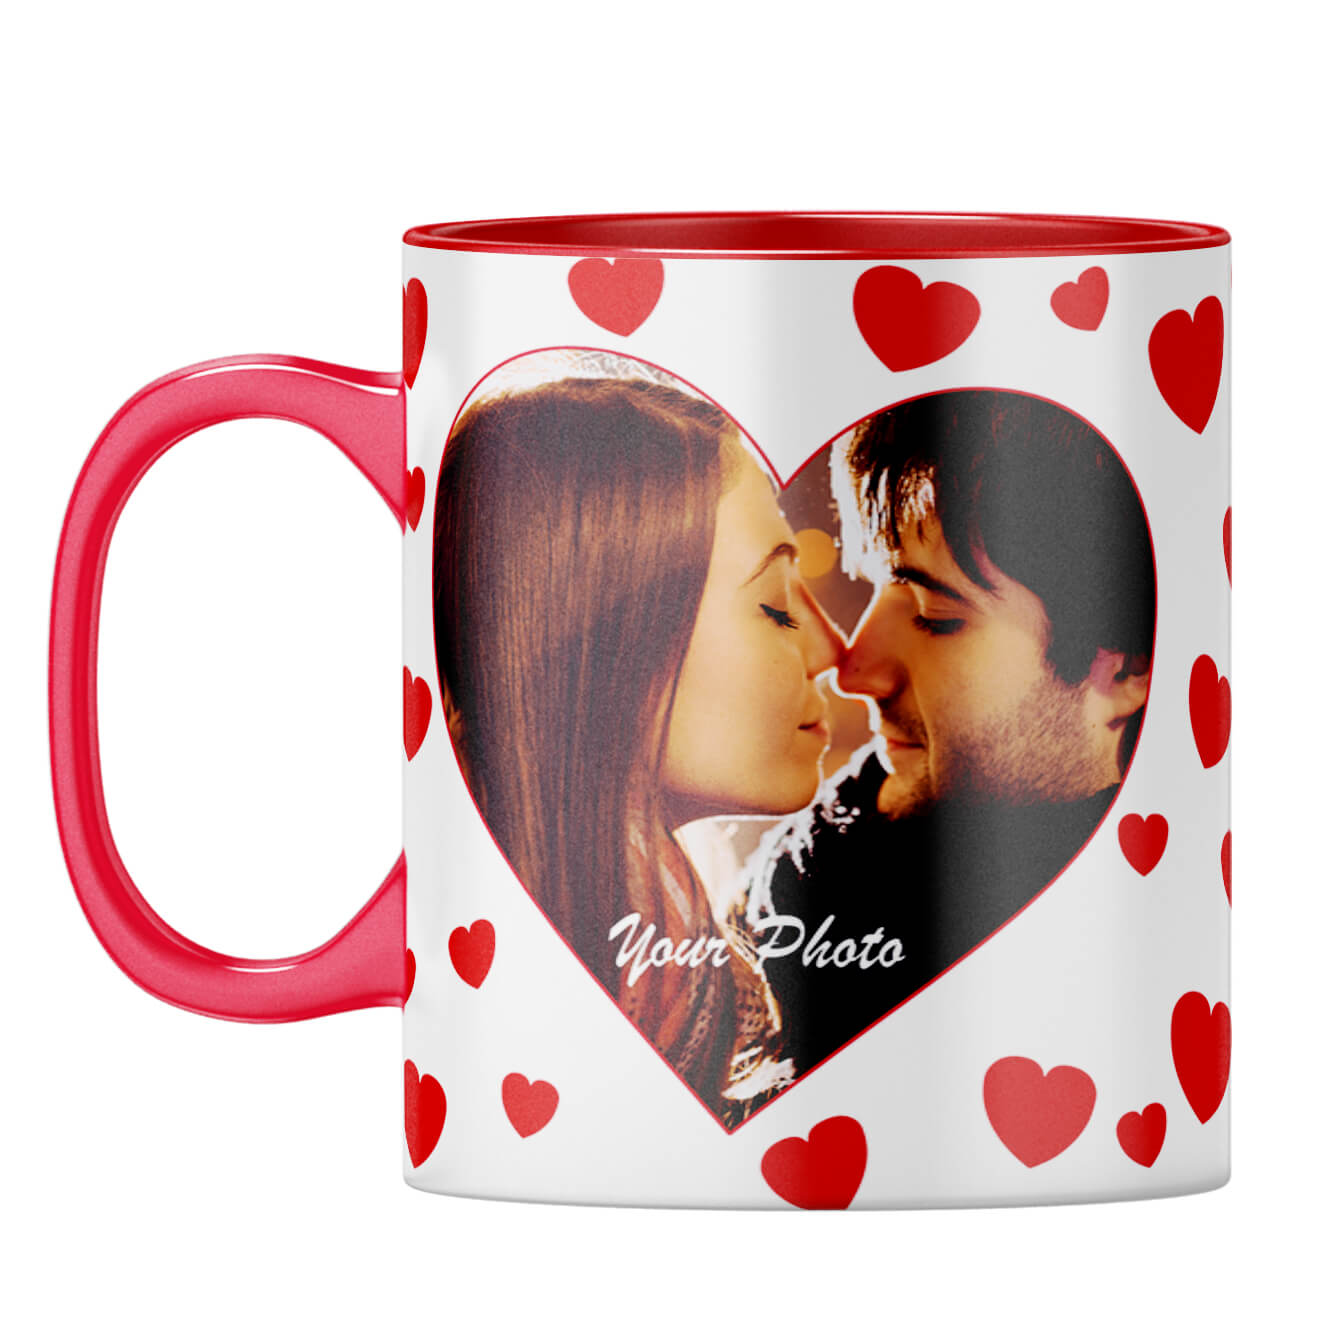 Loving Hearts Coffee Mug Red